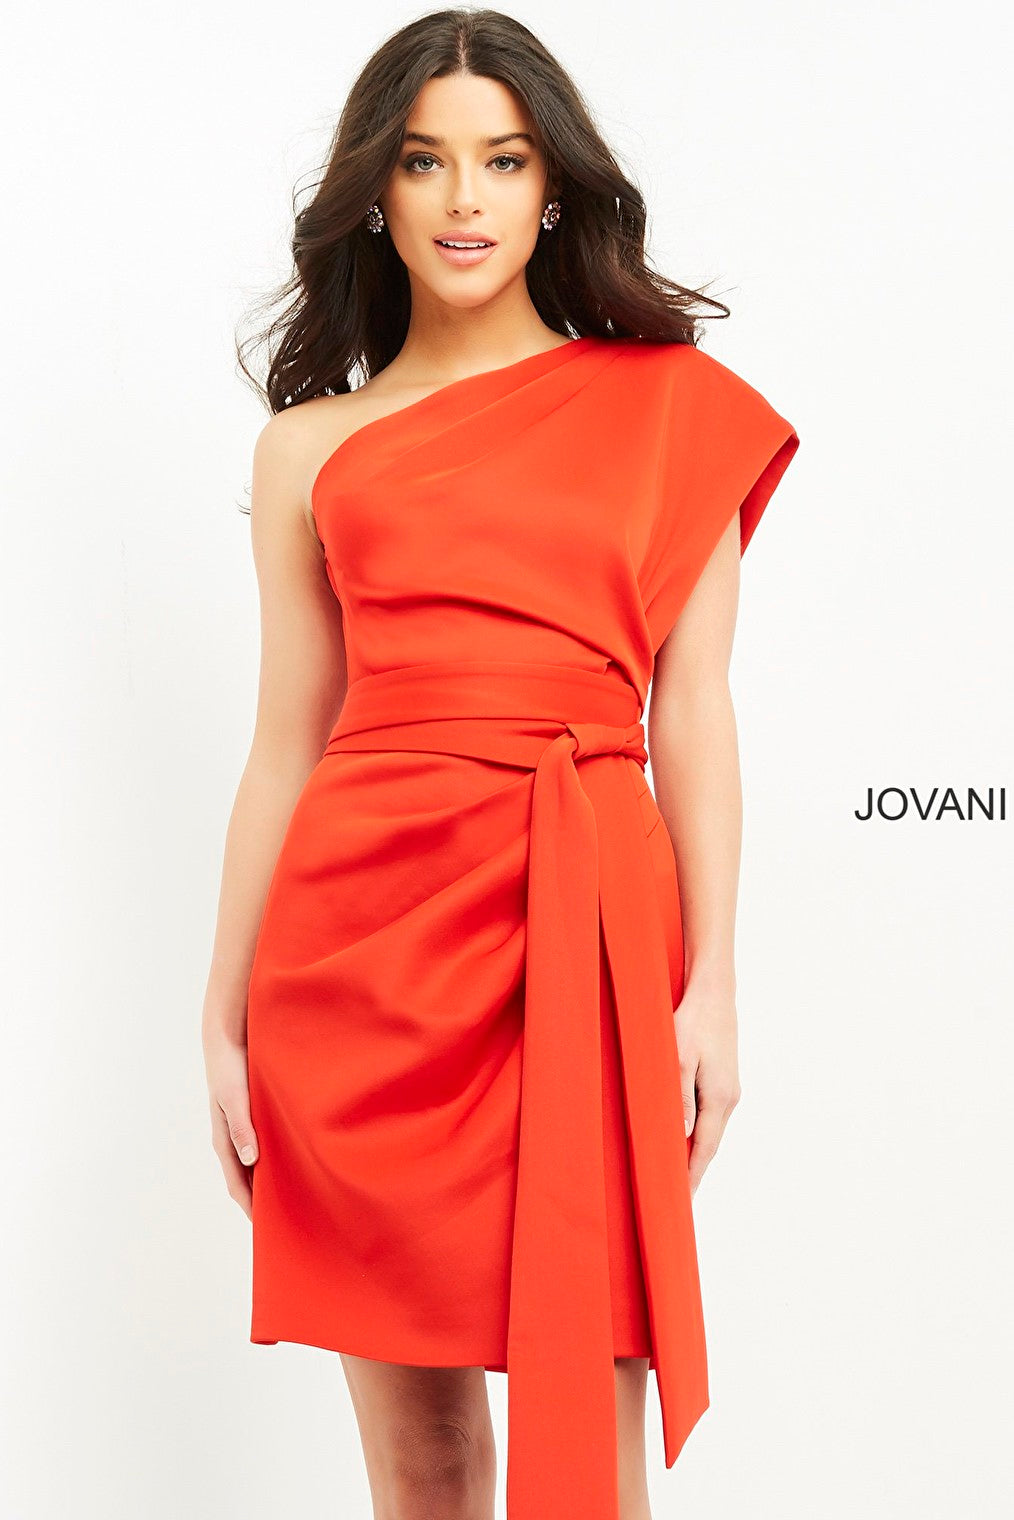 Tomato short contemporary Jovani dress 06316